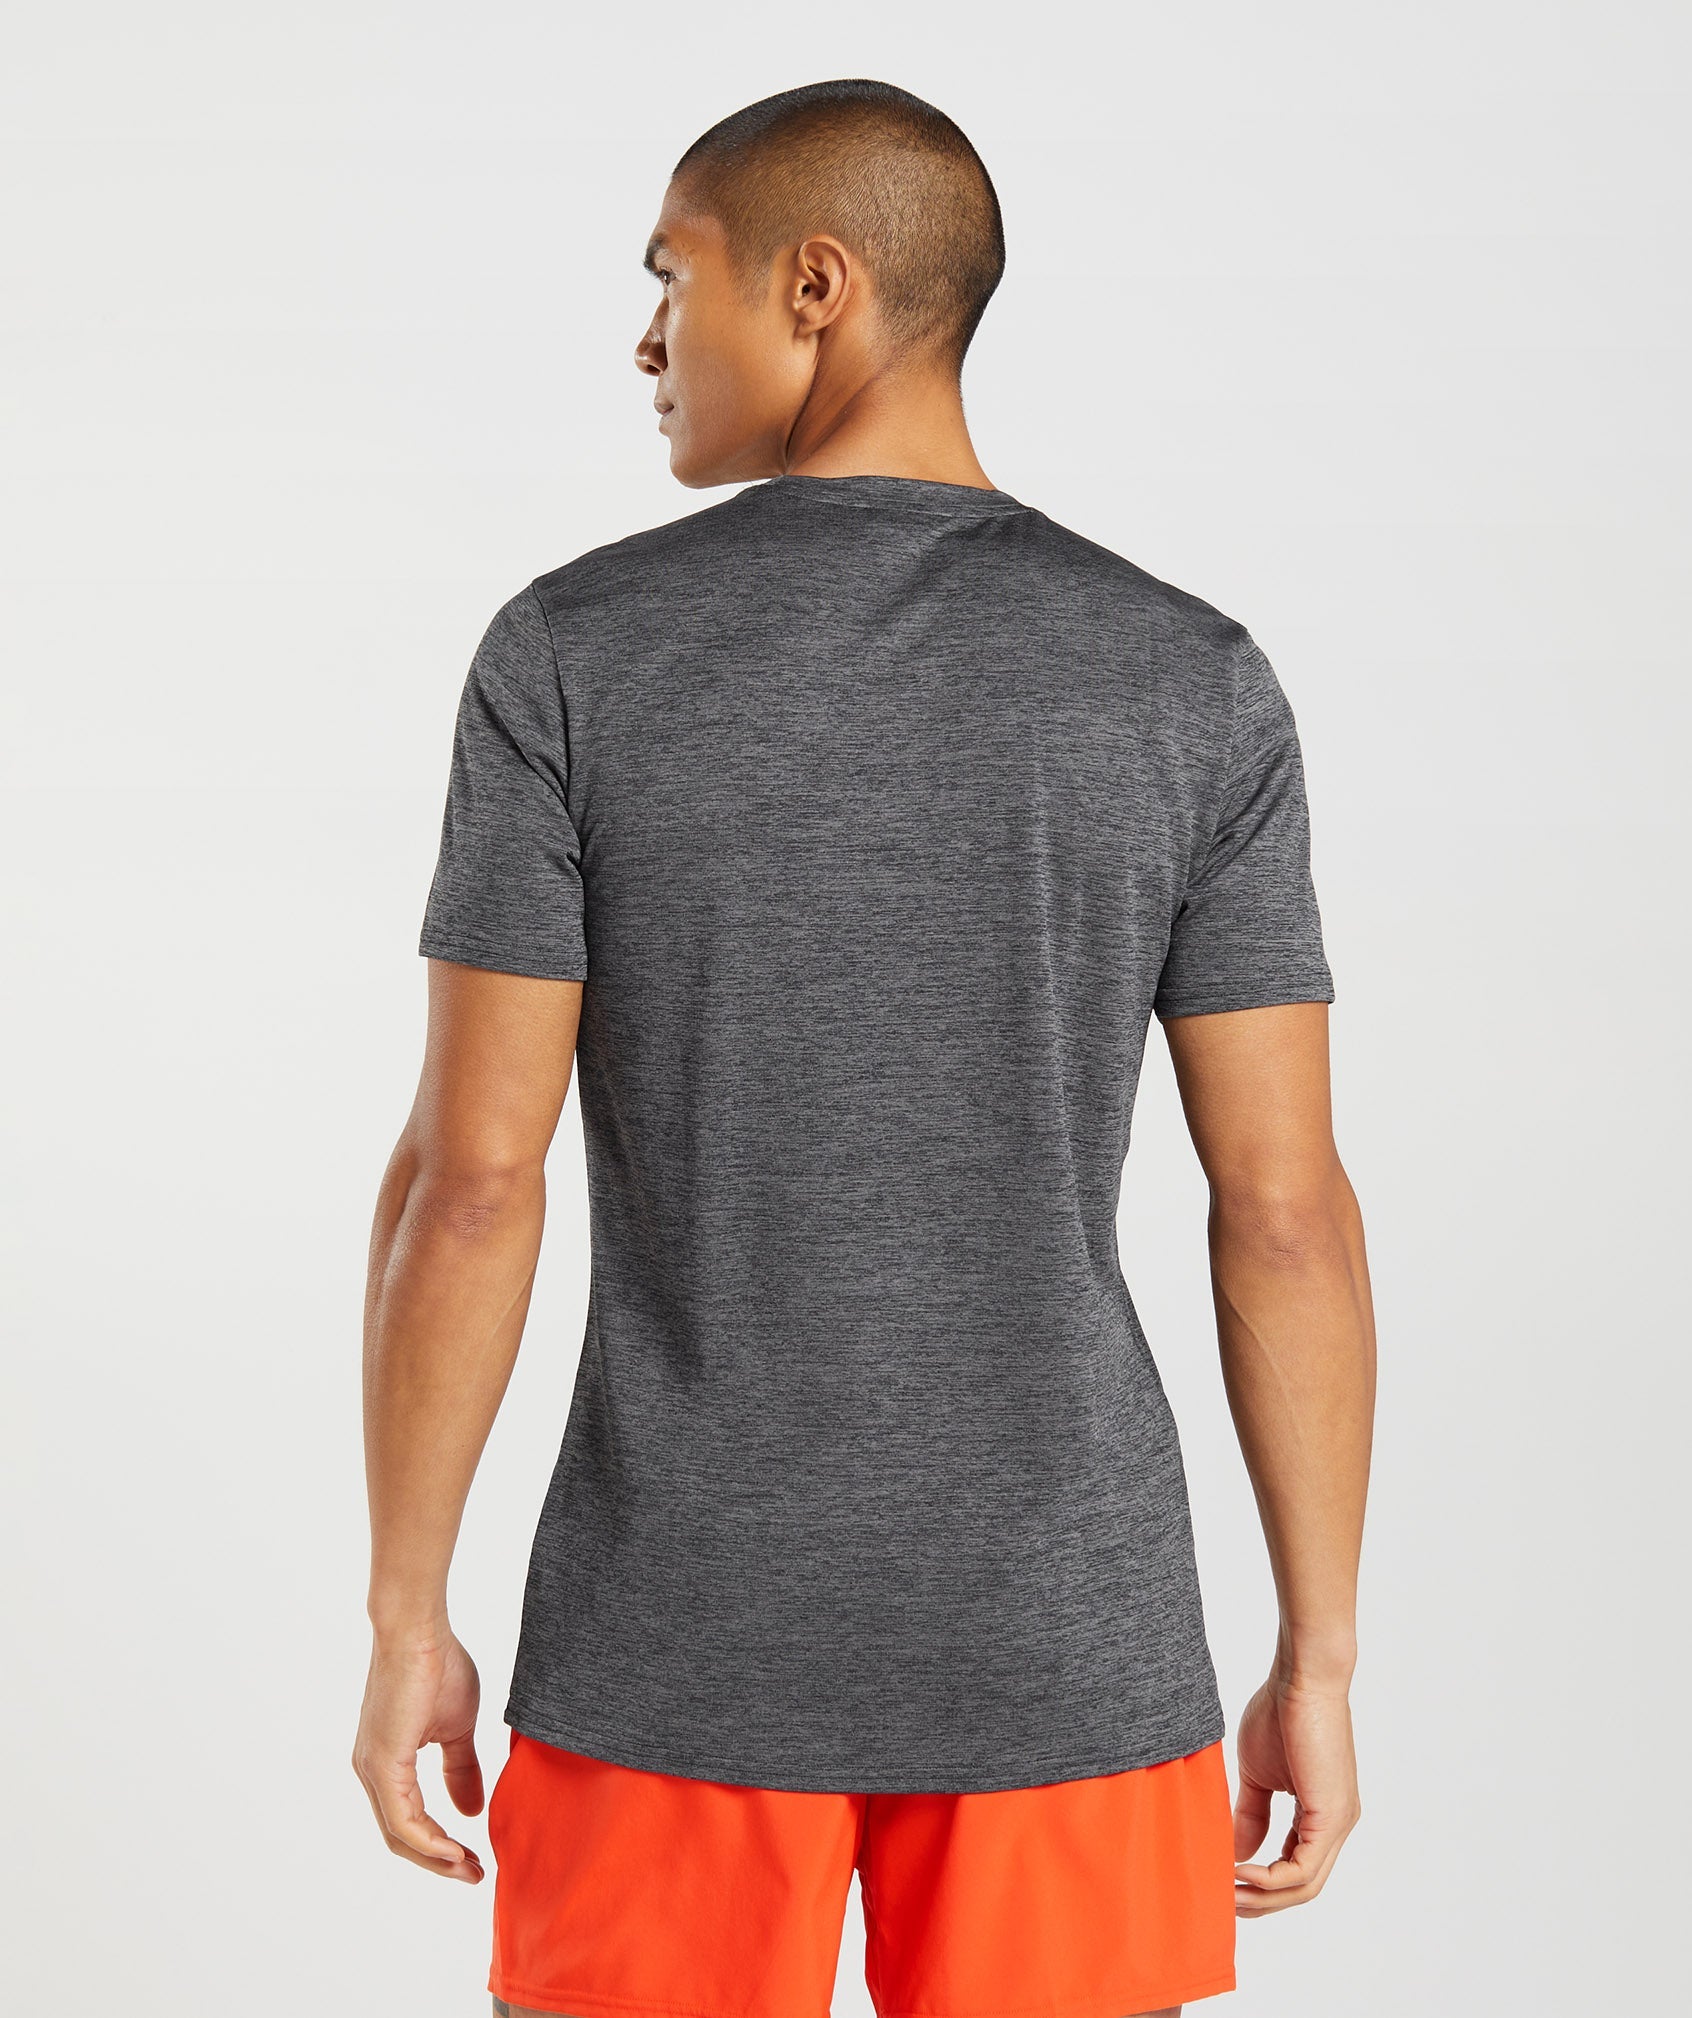 New Release: Gymshark Crest T-Shirt - Gymfluencers